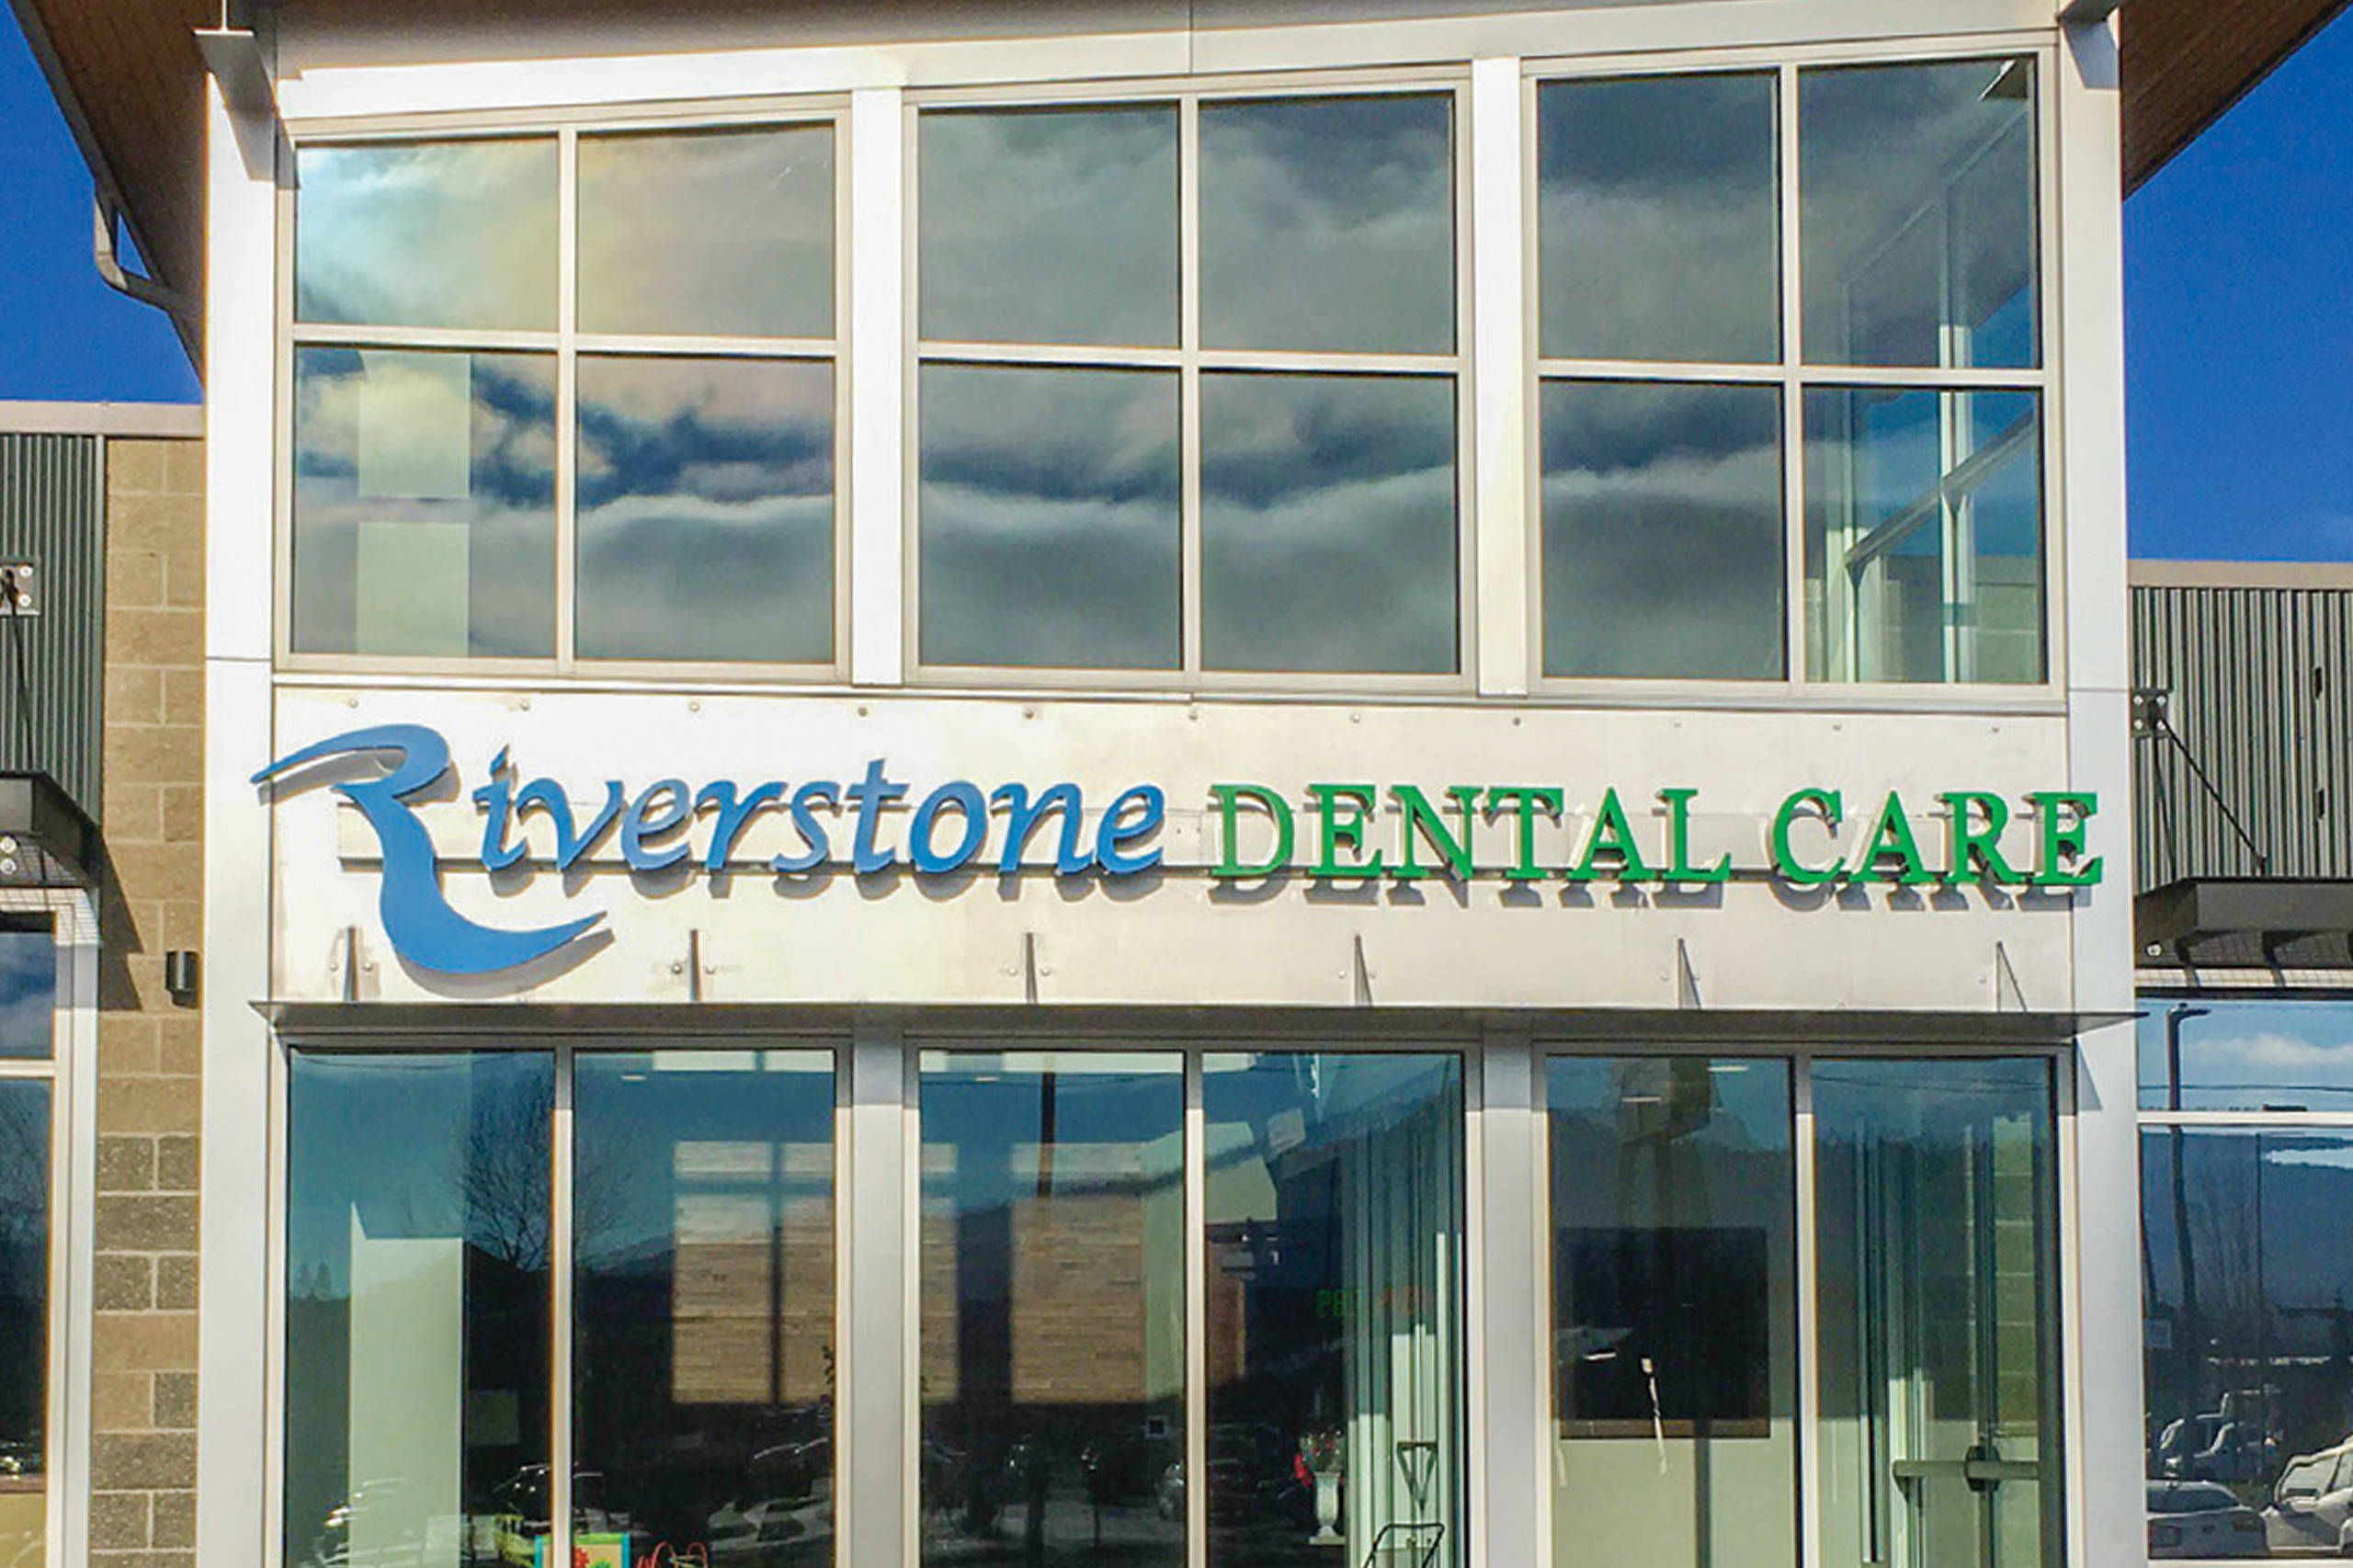 Riverstone Dental Care Sign